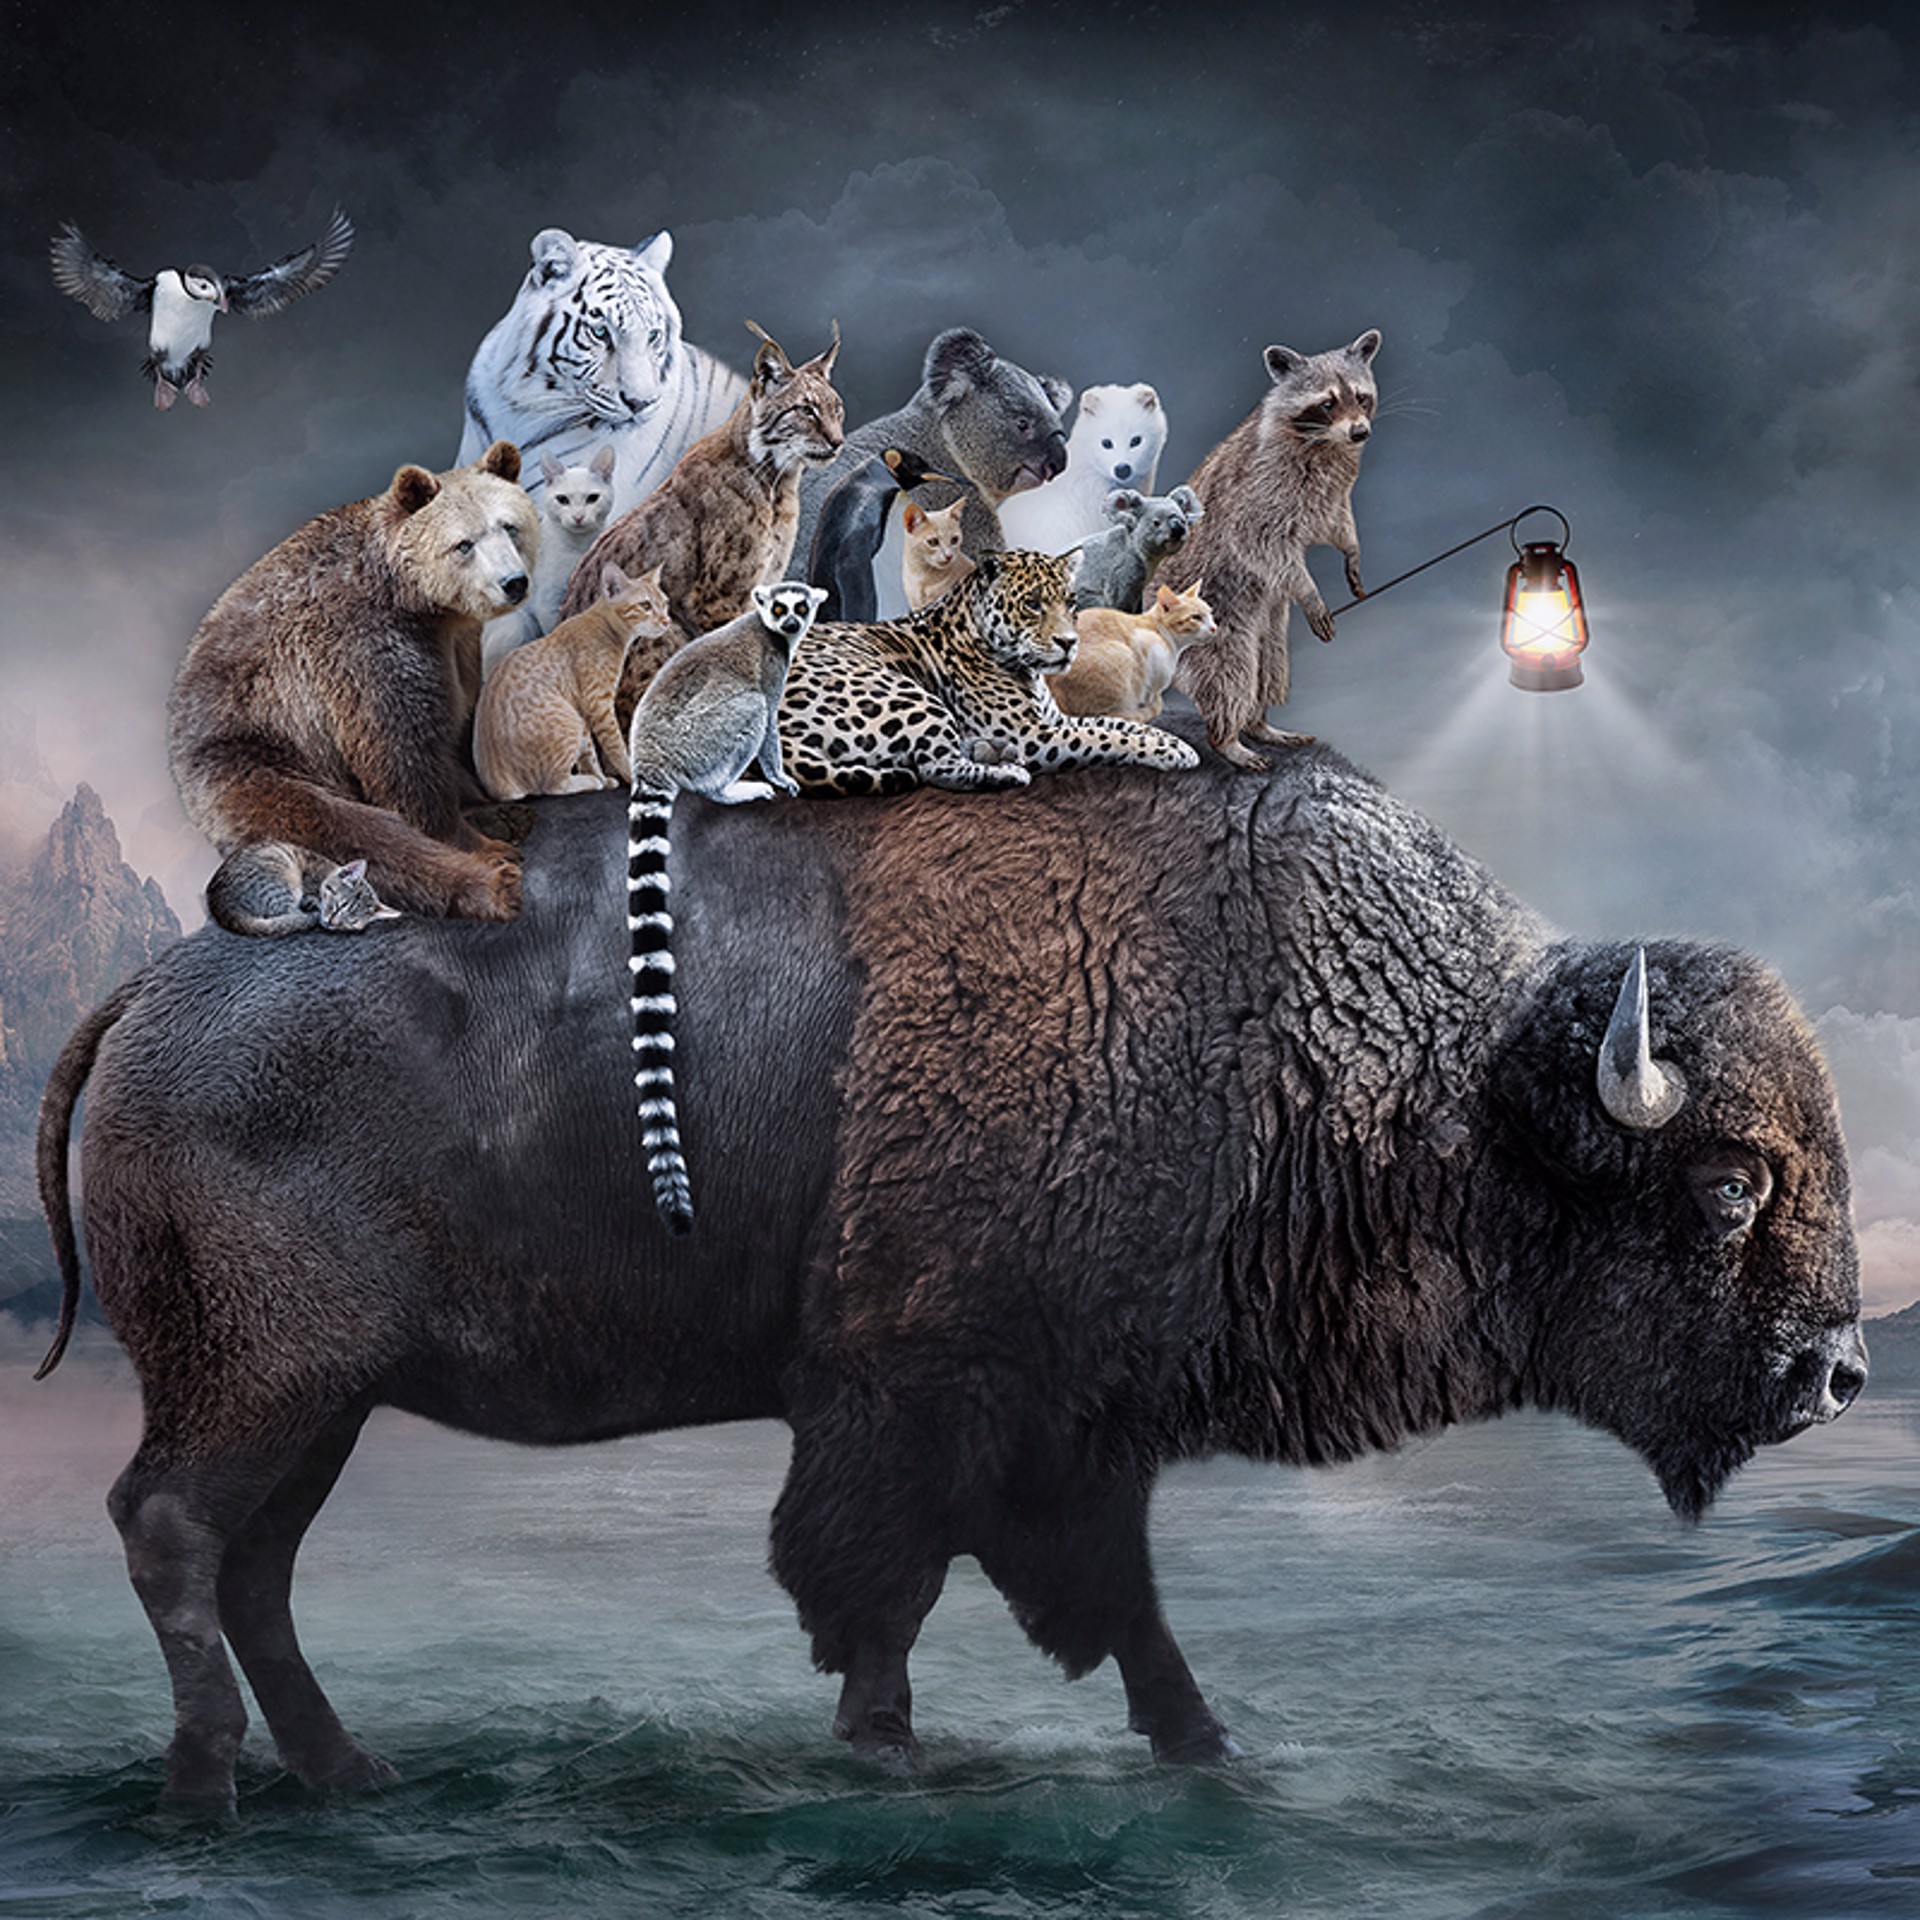 Shelter - Spirit of the Bison by Marcin Owczarek